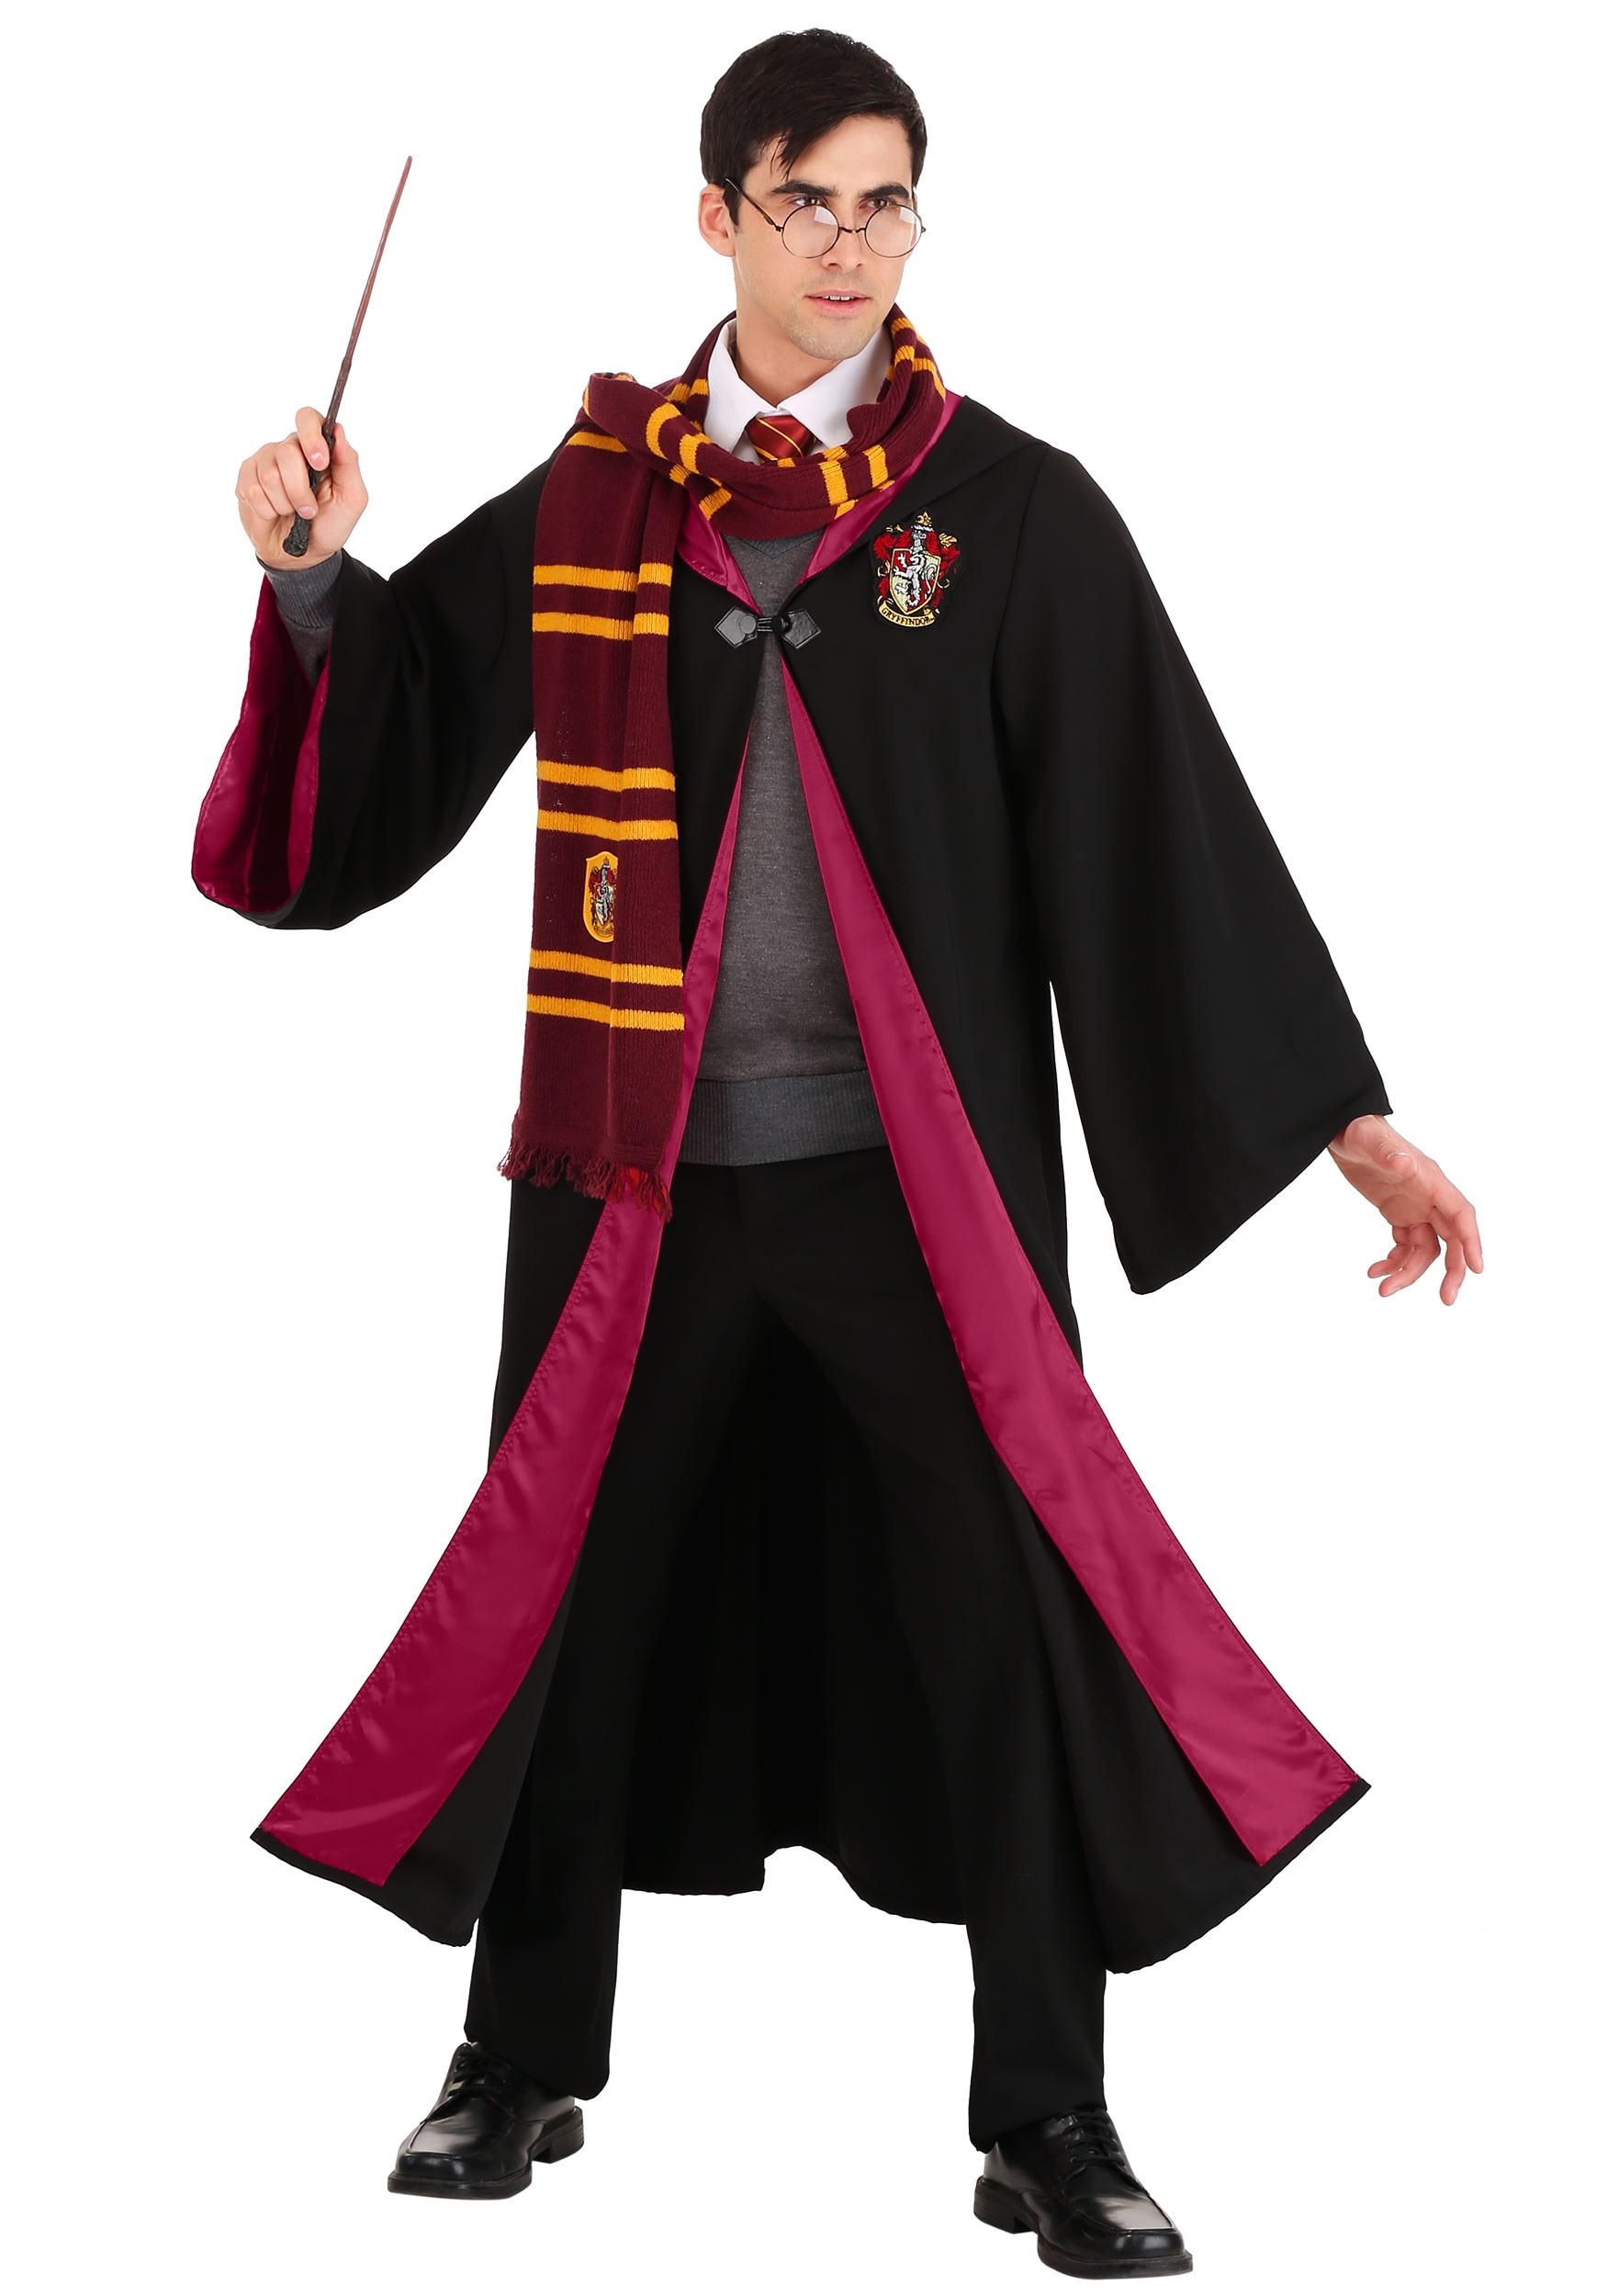 Fantasia de Harry Potter para Adultos -Deluxe Harry Potter Costume for